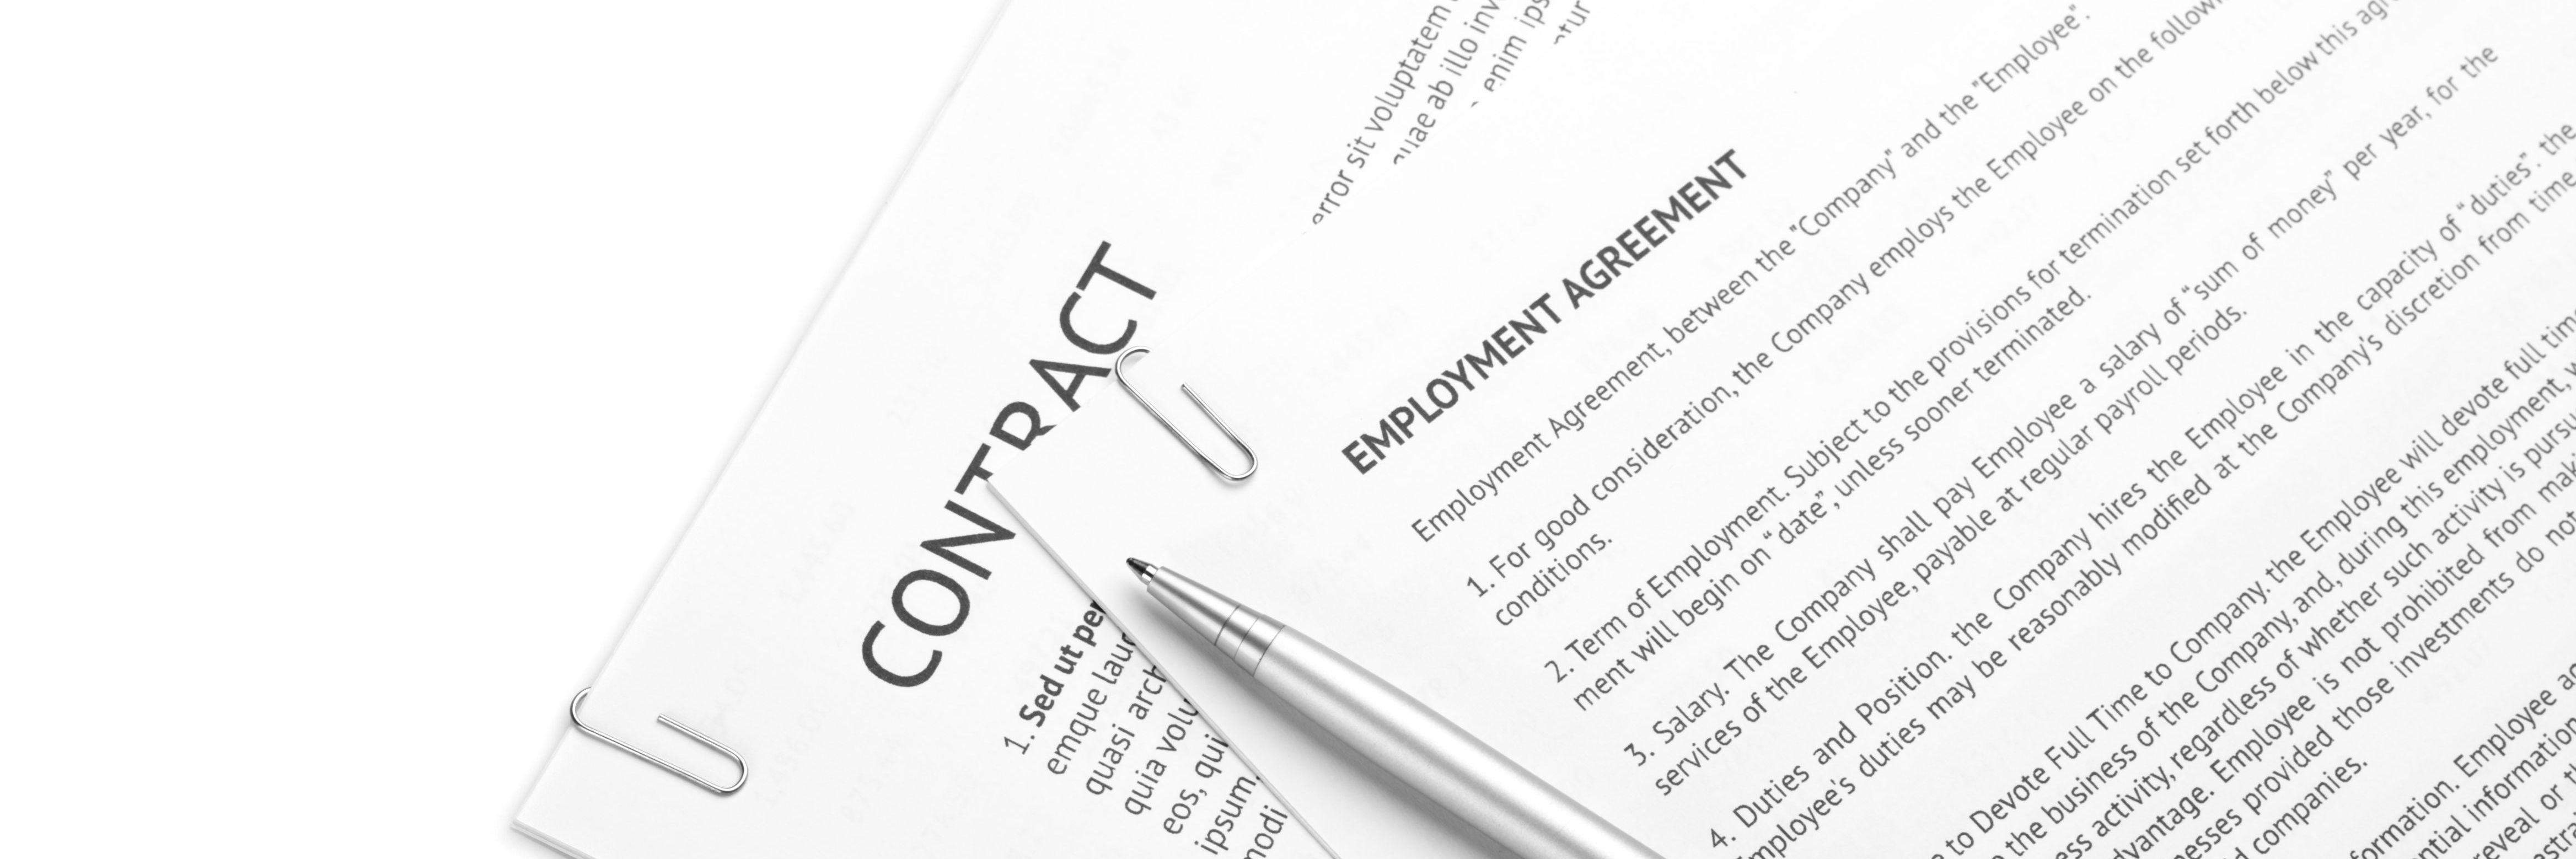 Employment Contracts - Latest Developments & Best Practice